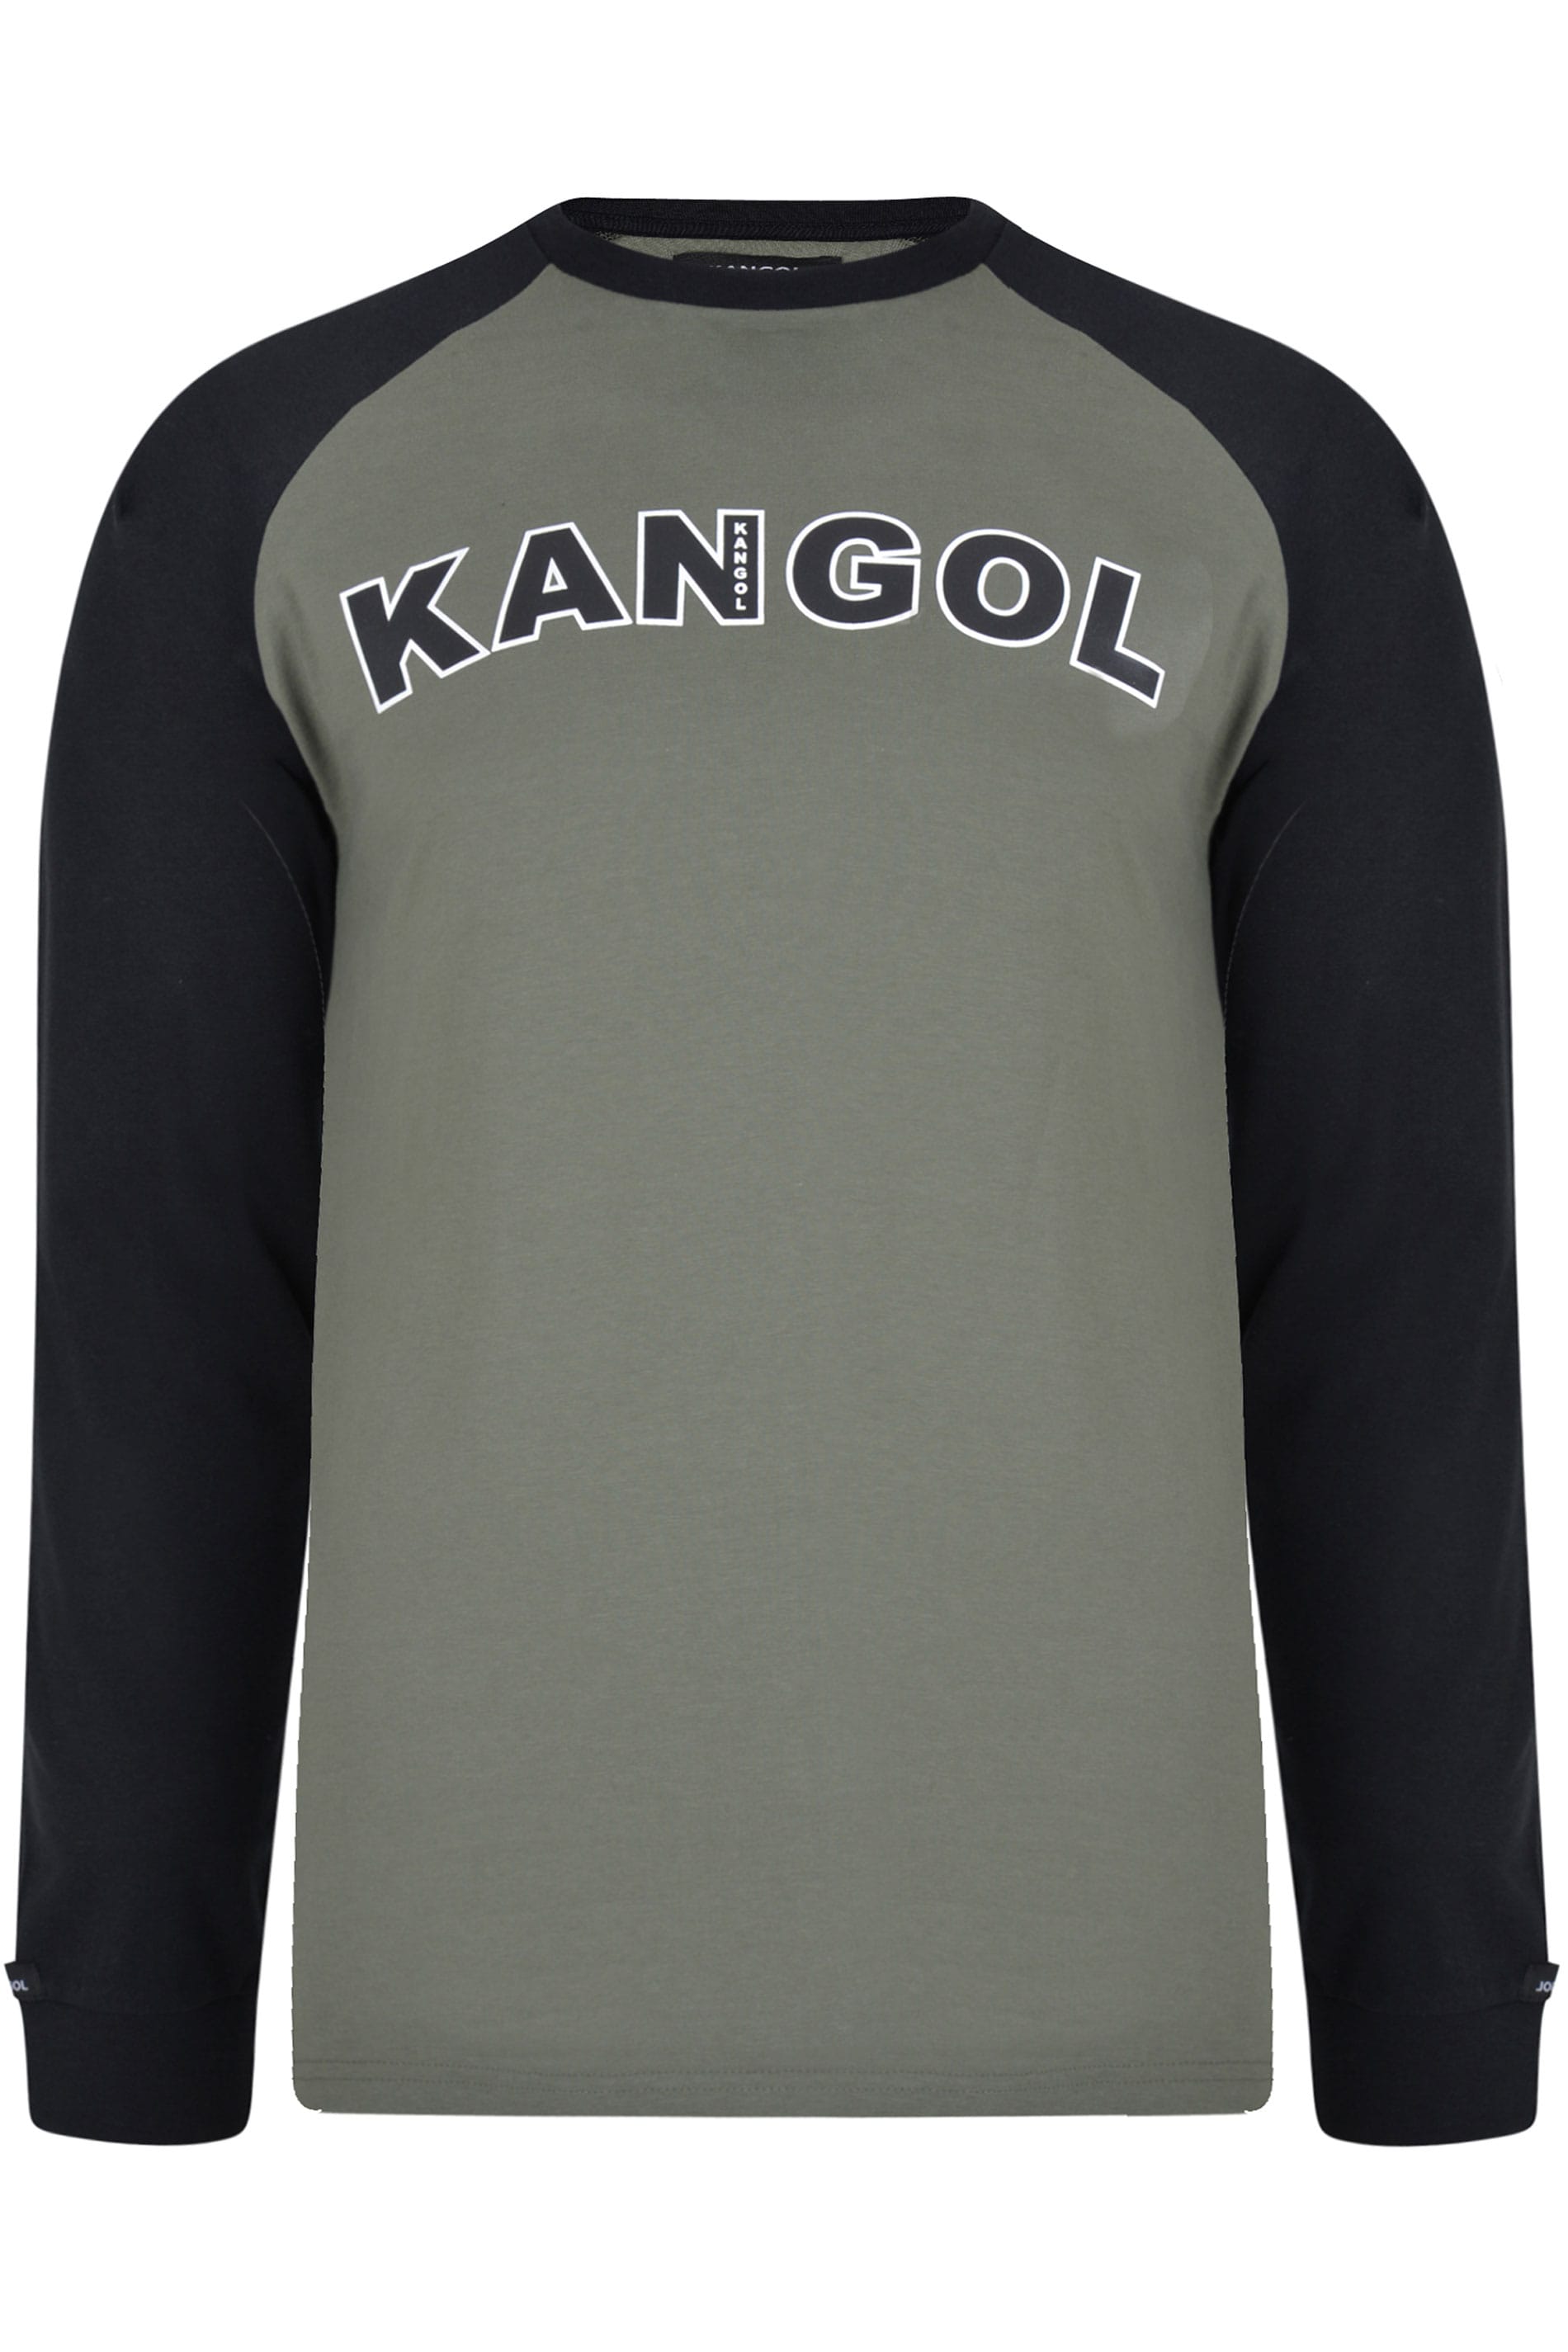 KANGOL Khaki Long Sleeve Logo T-Shirt | BadRhino | BadRhino